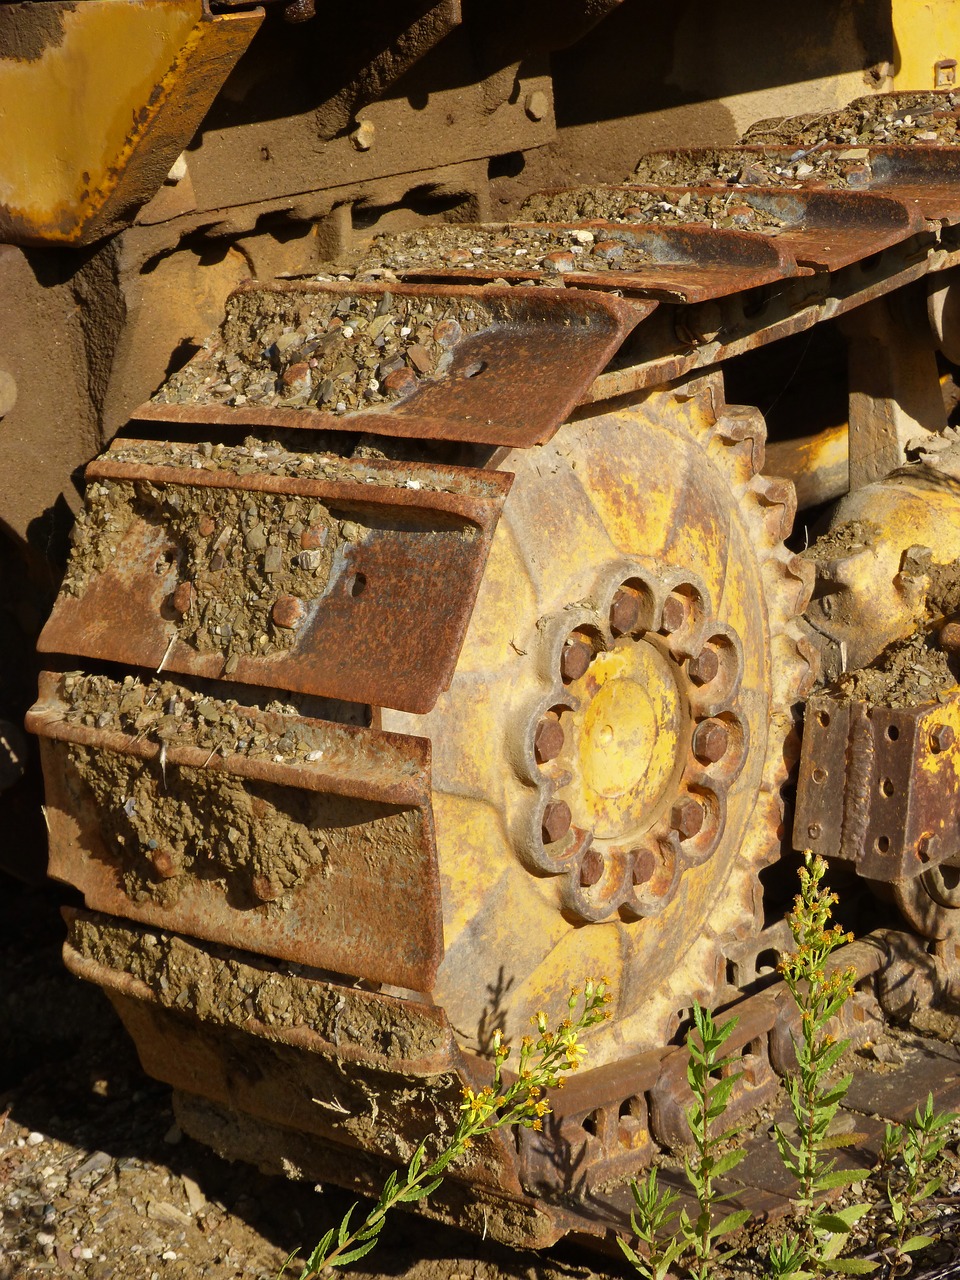 Image - machinery retro backhoe excavator